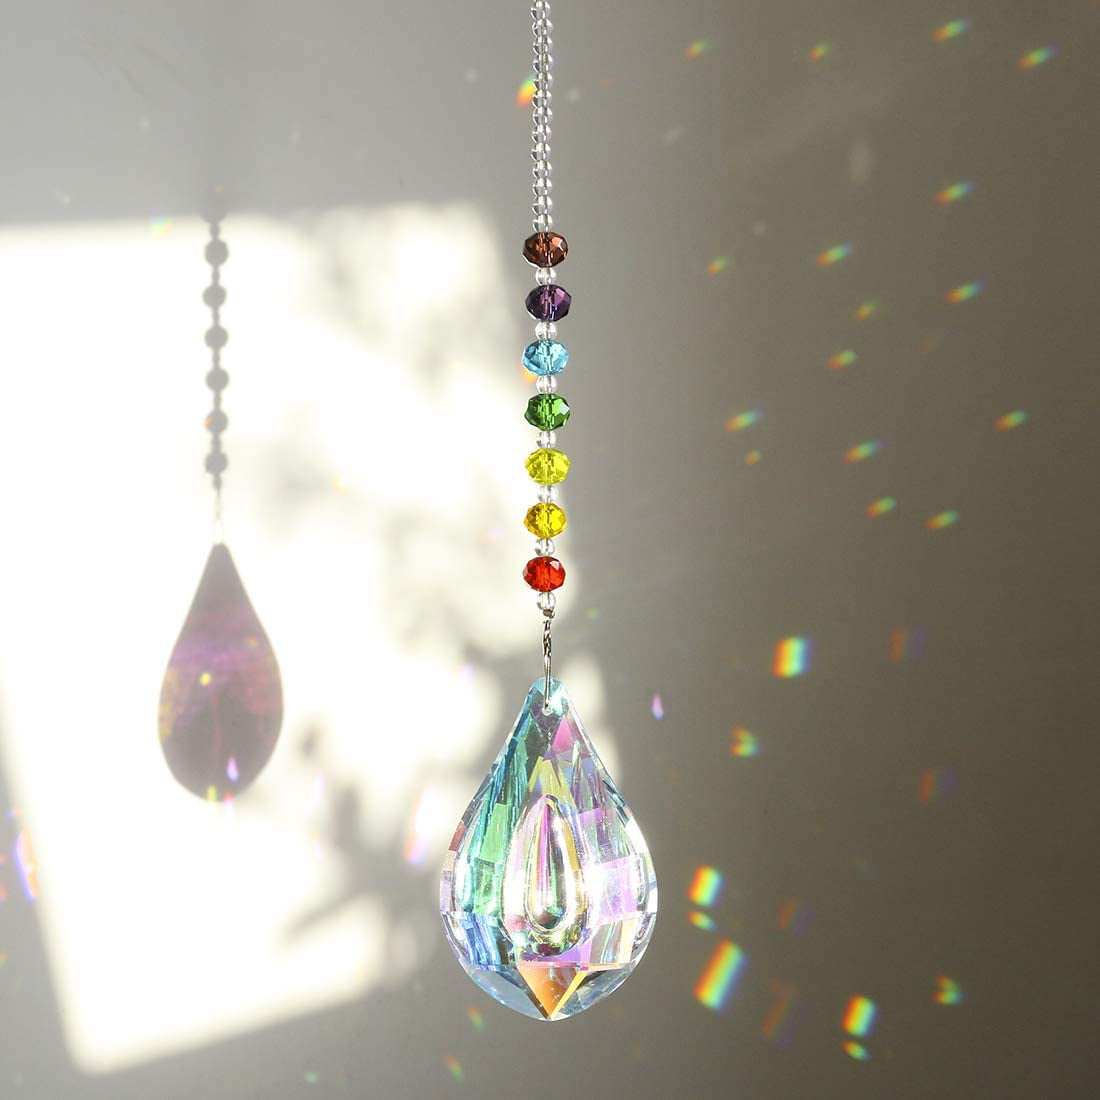 Hanging Crystal Sun Catcher Prism Ball Rainbow Maker Pendant Window Decorations 